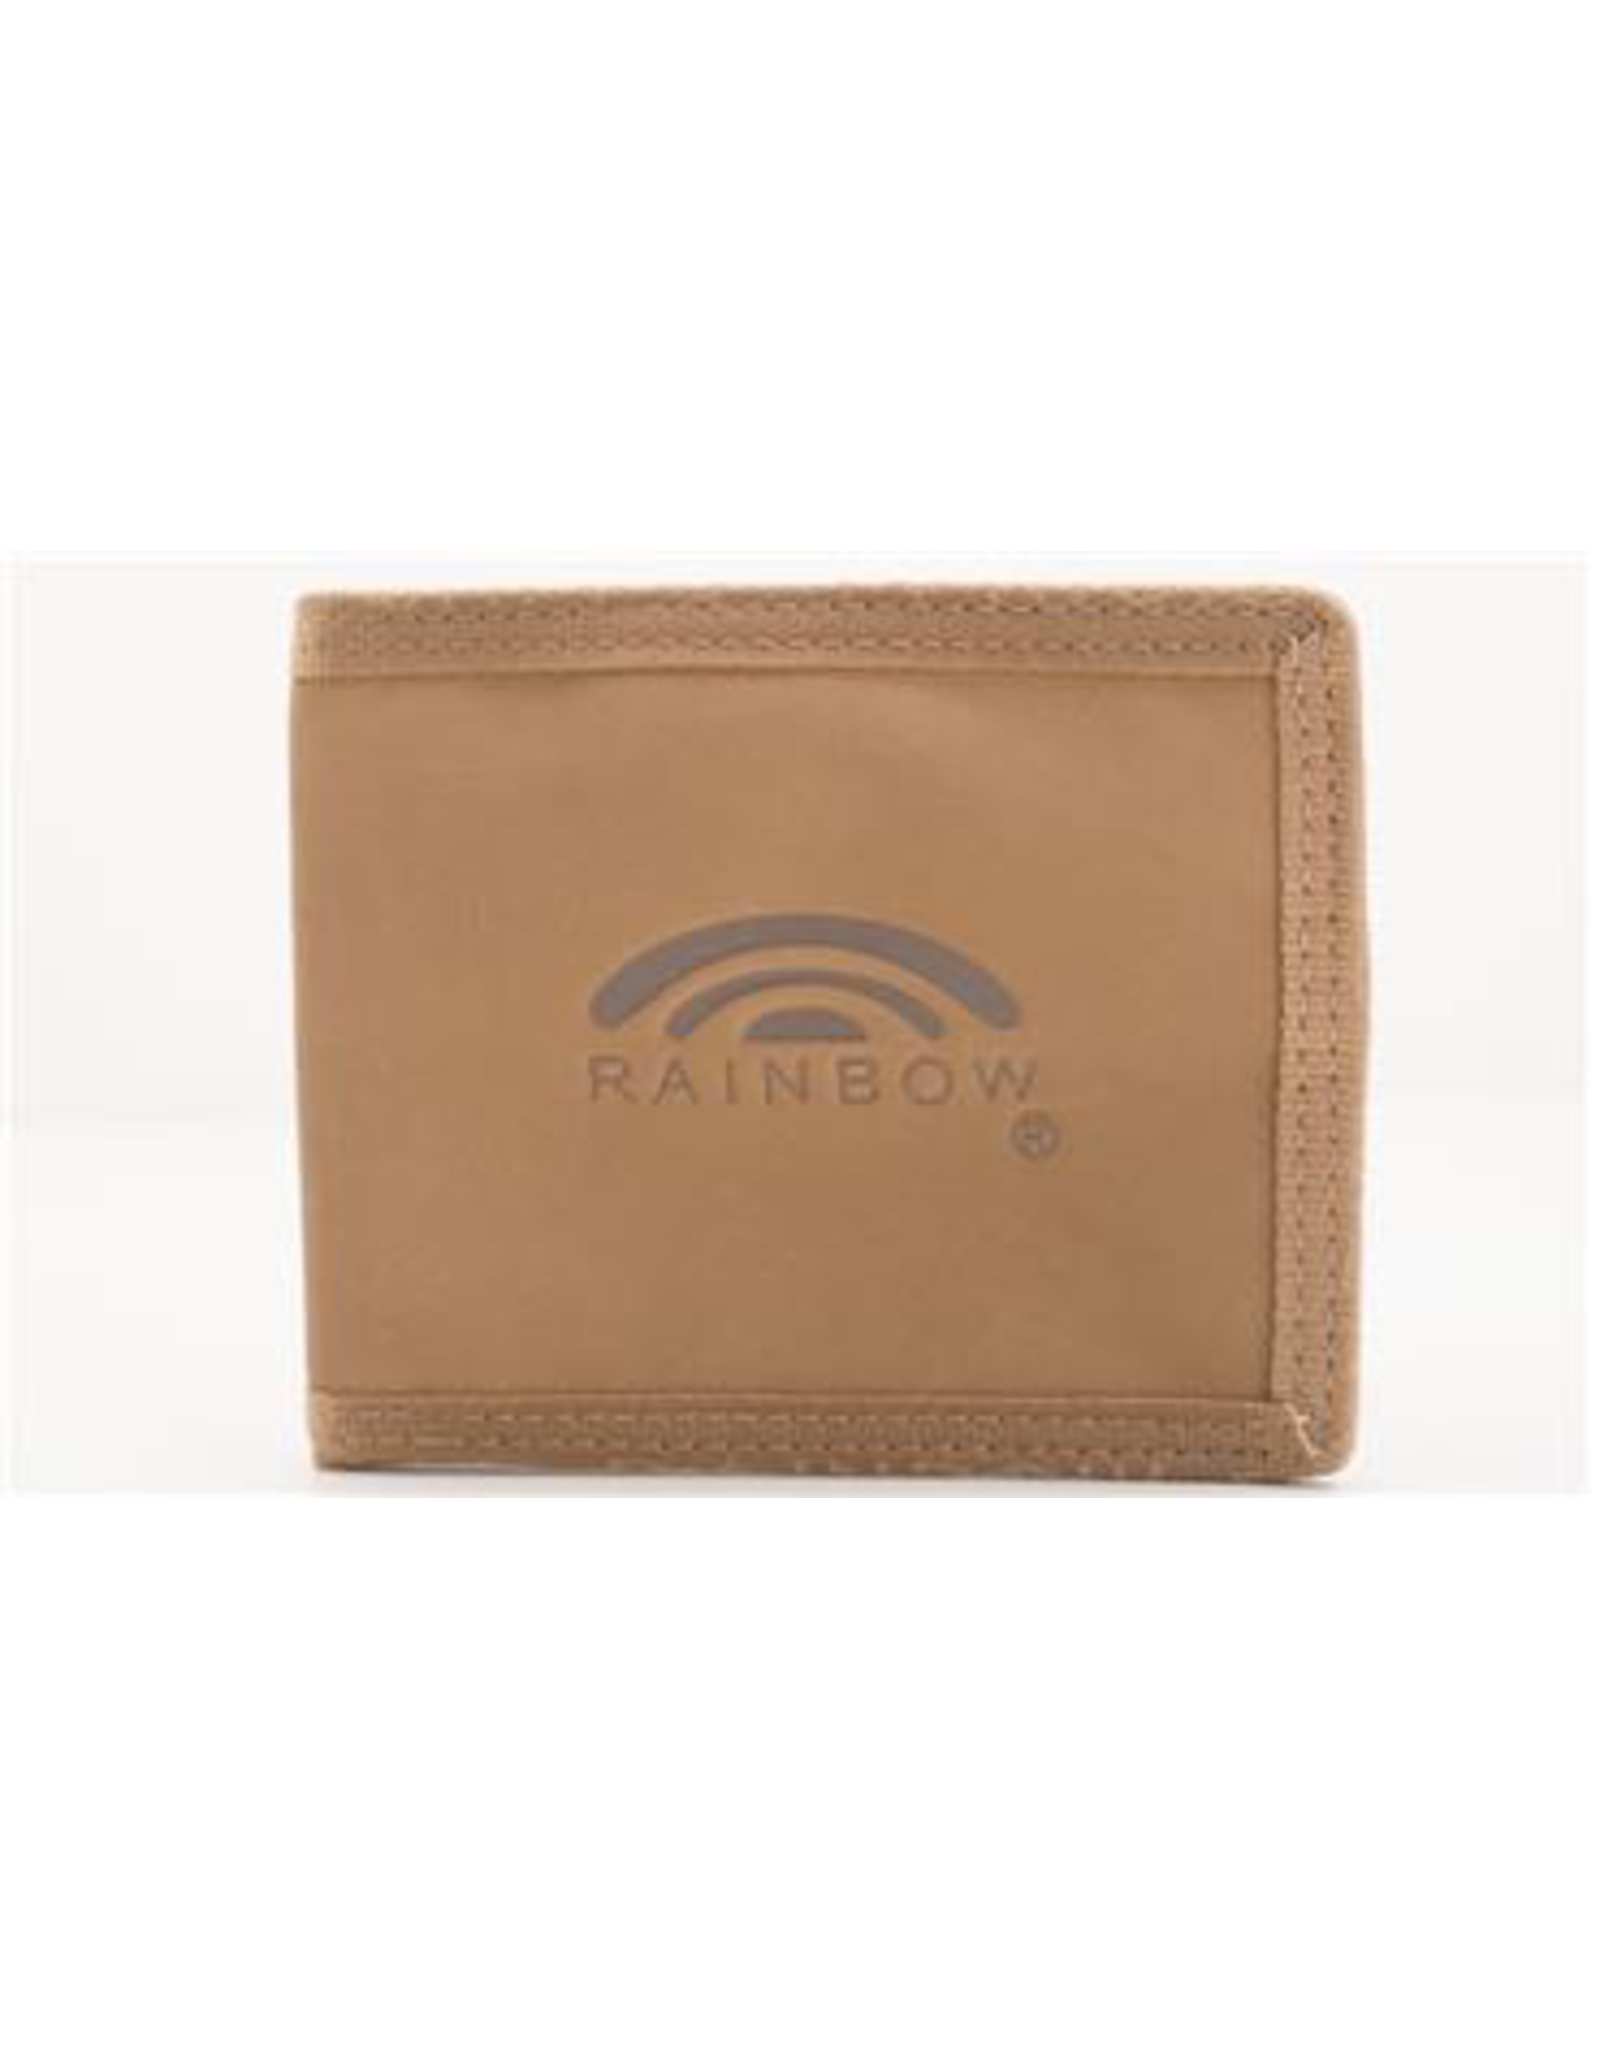 RAINBOW Sierra Brown - Bi-Fold Wallet with Jacquard Webbing around the sides